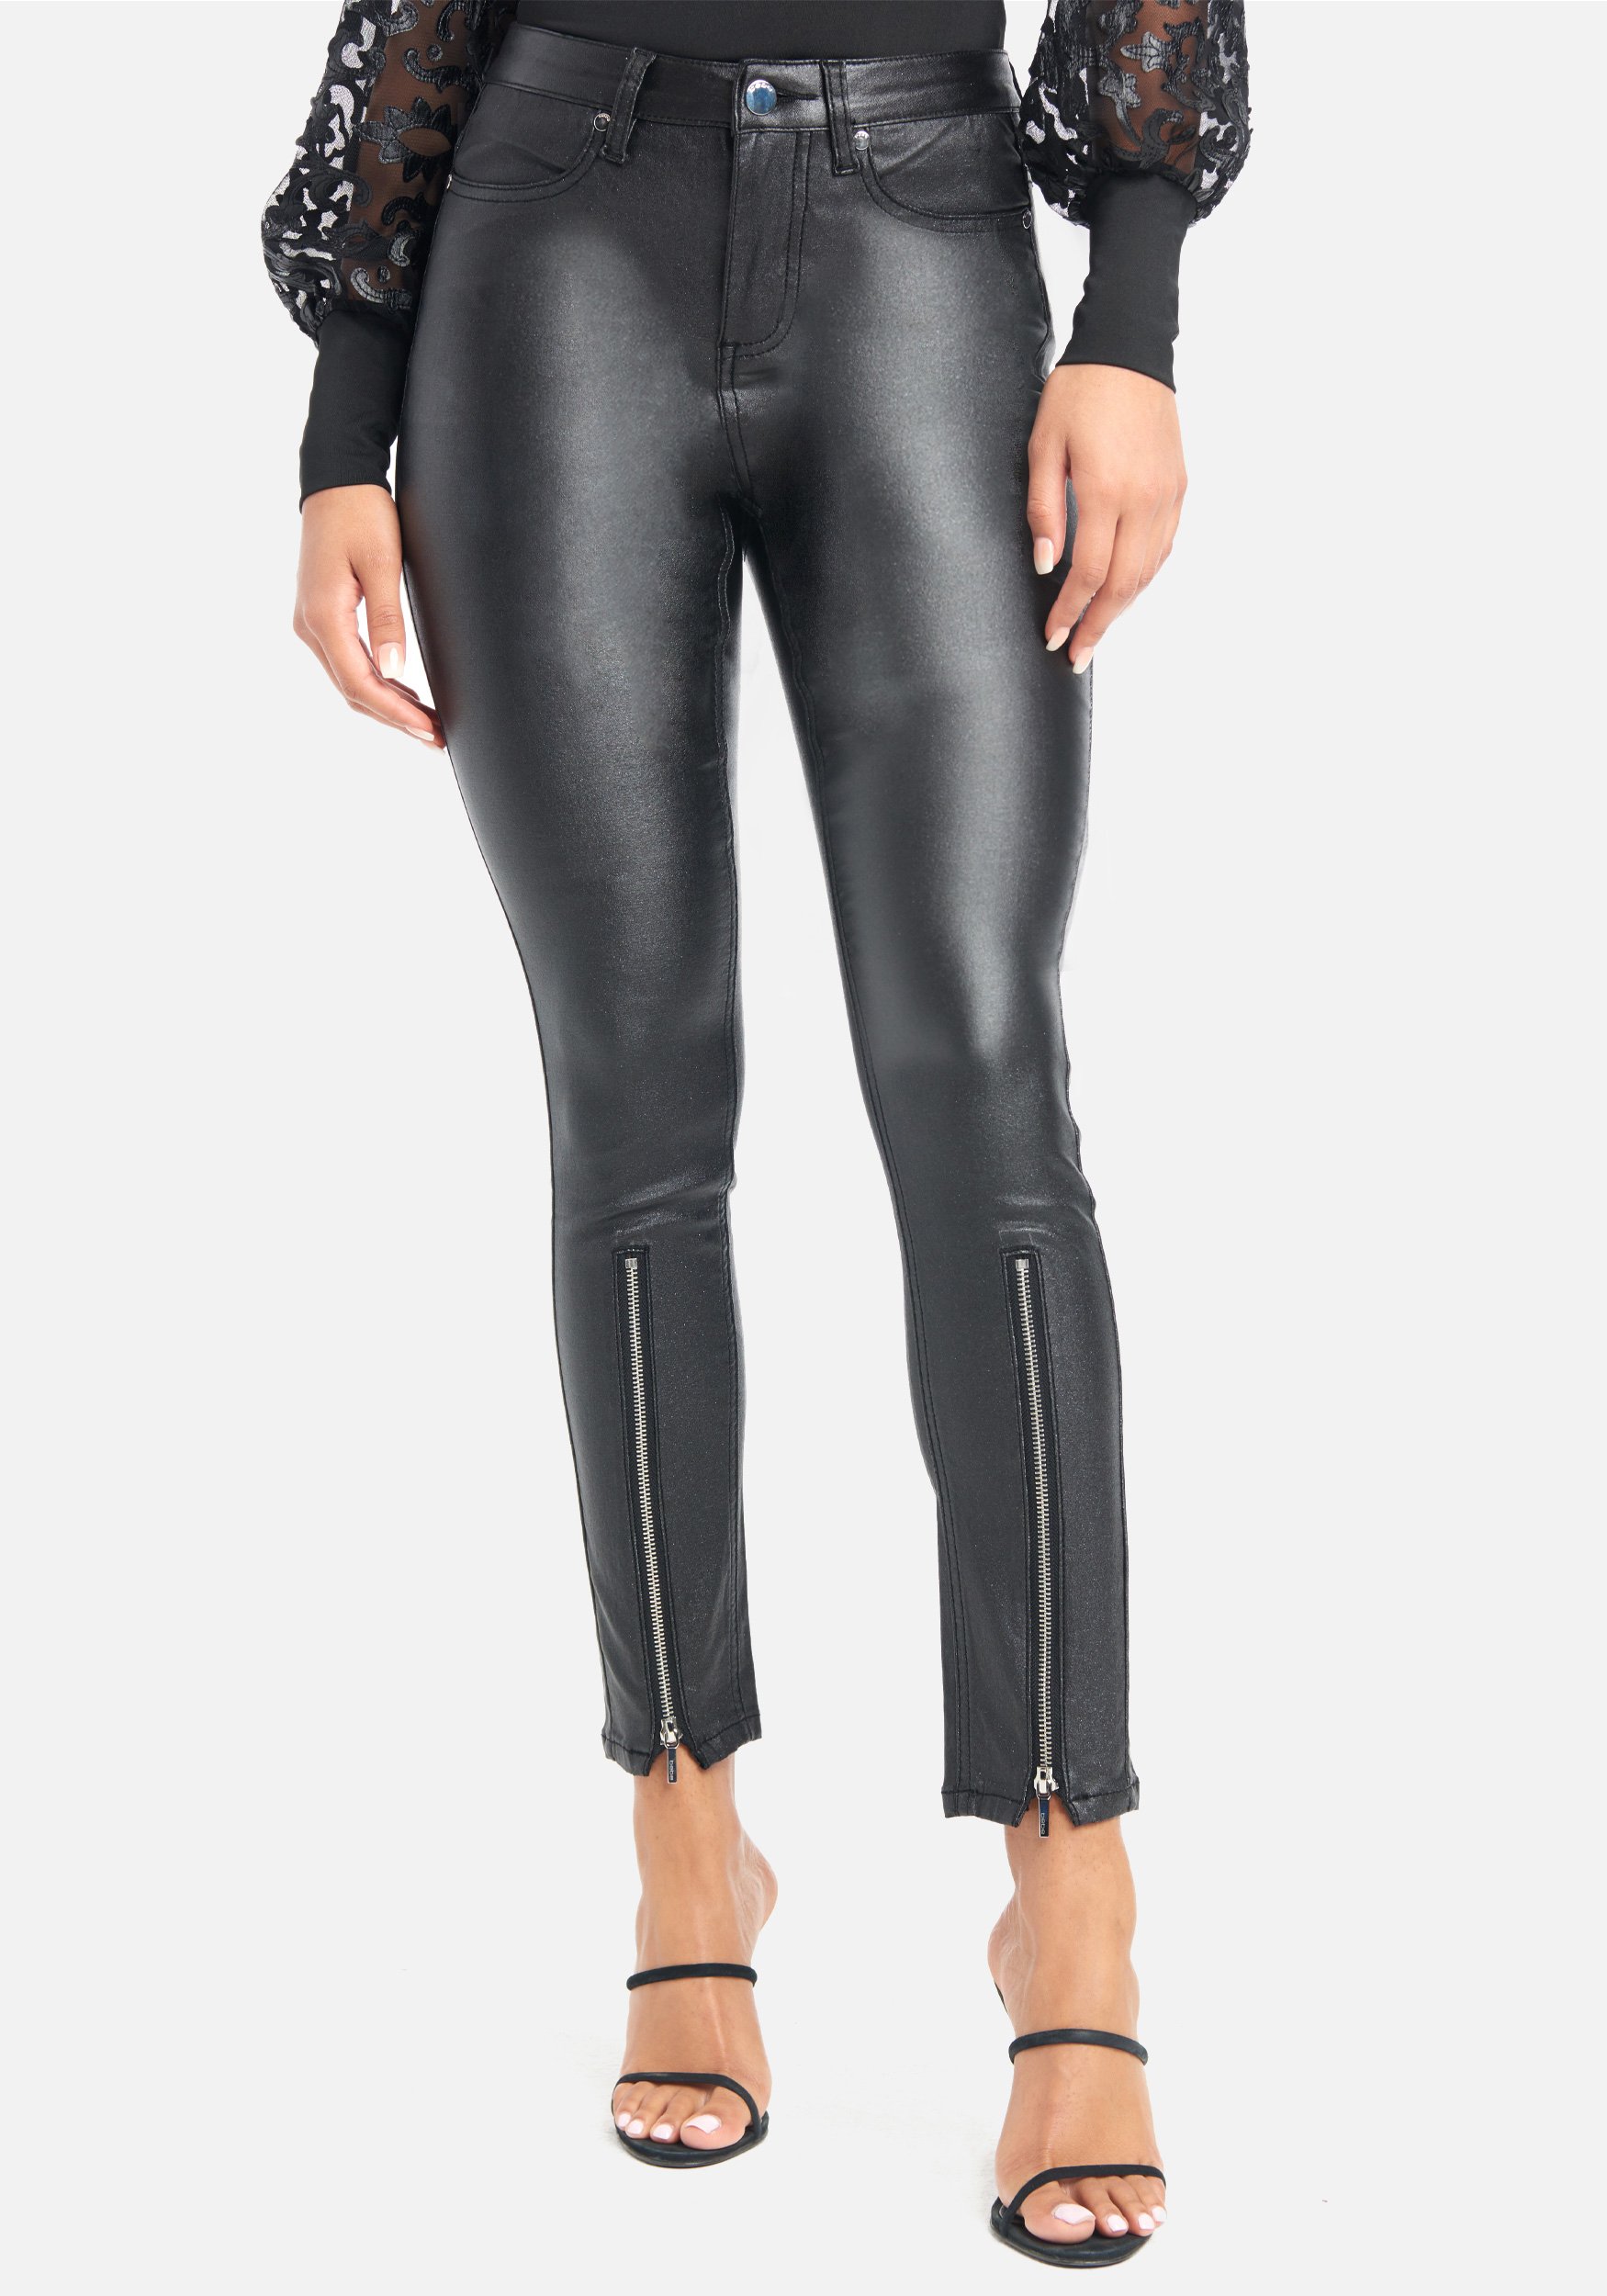 Bebe Women's Coated Glitter Skinny Jeans, Size 25 in Black Wash Spandex/Viscose